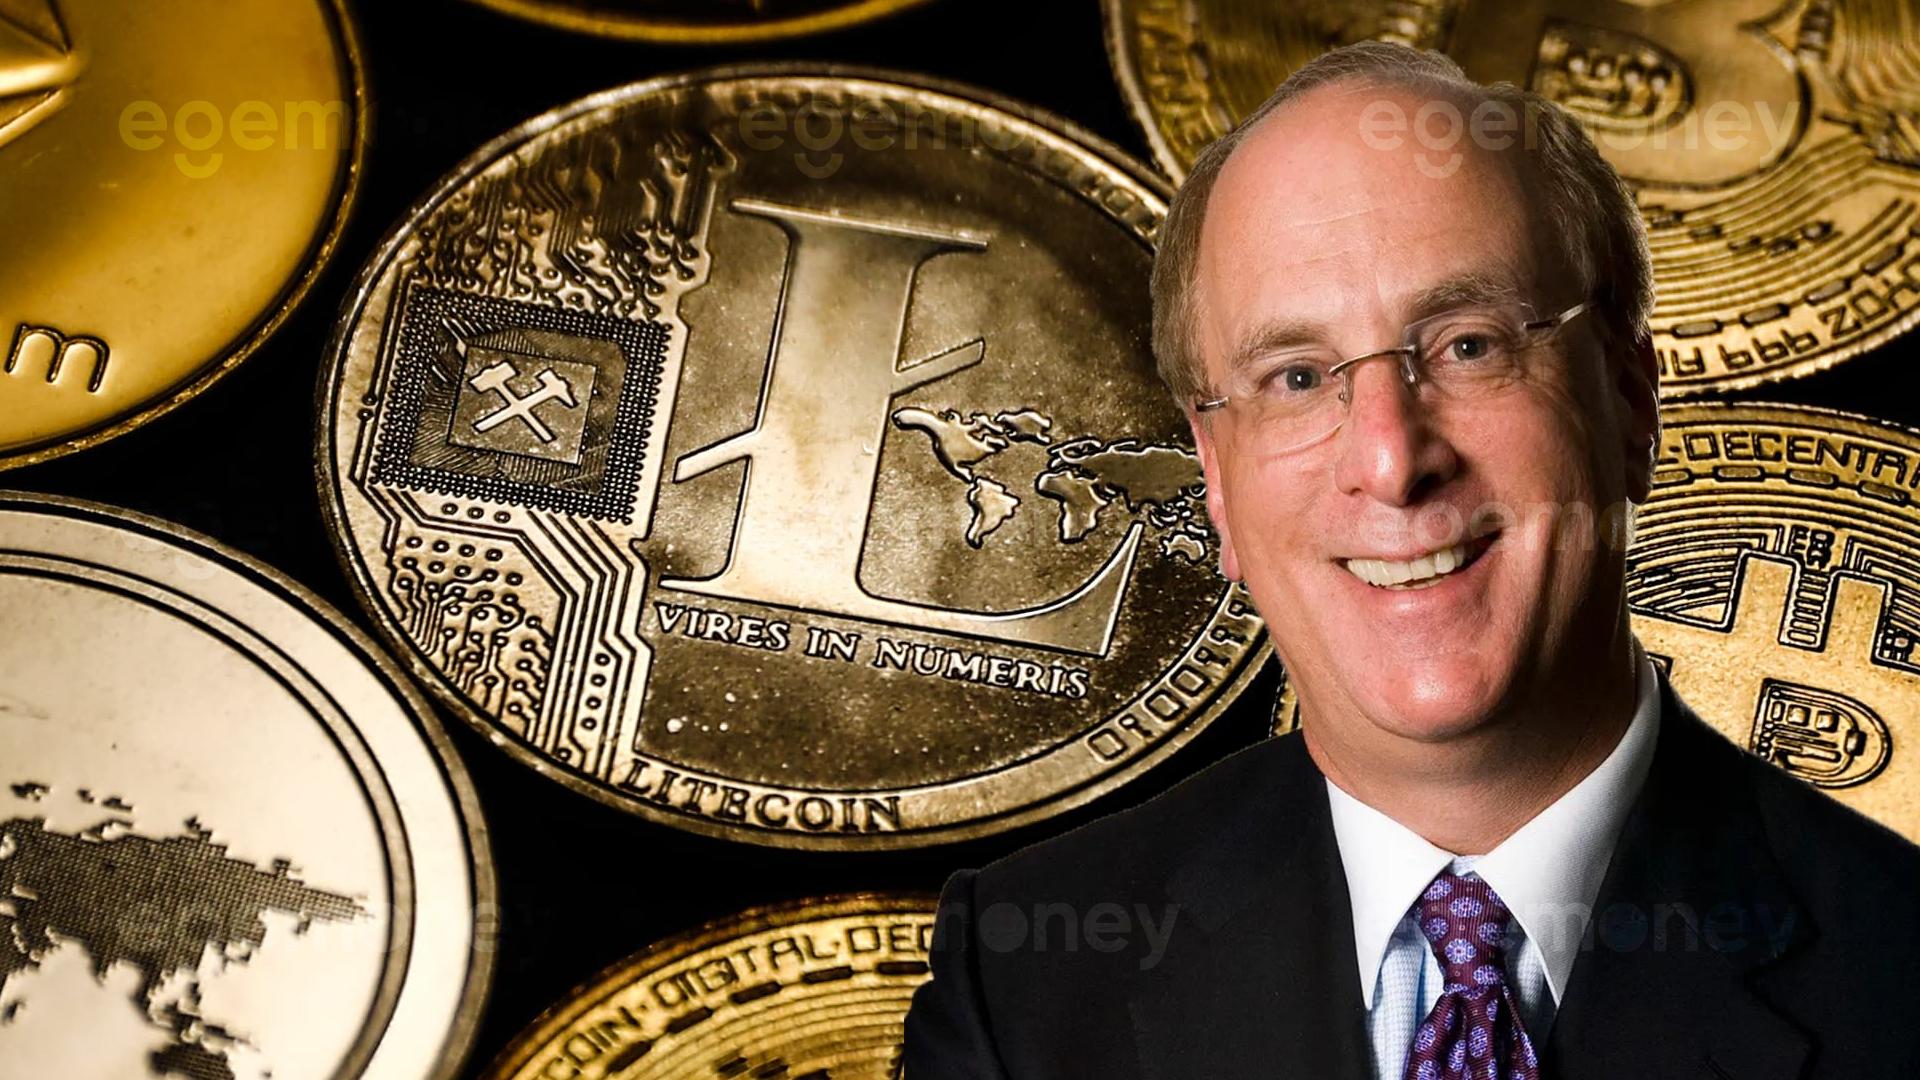 BlackRock CEO Larry Fink Describes Cryptocurrency as ‘Digitizing Gold’; Praises Bitcoin as an ‘International Asset’.